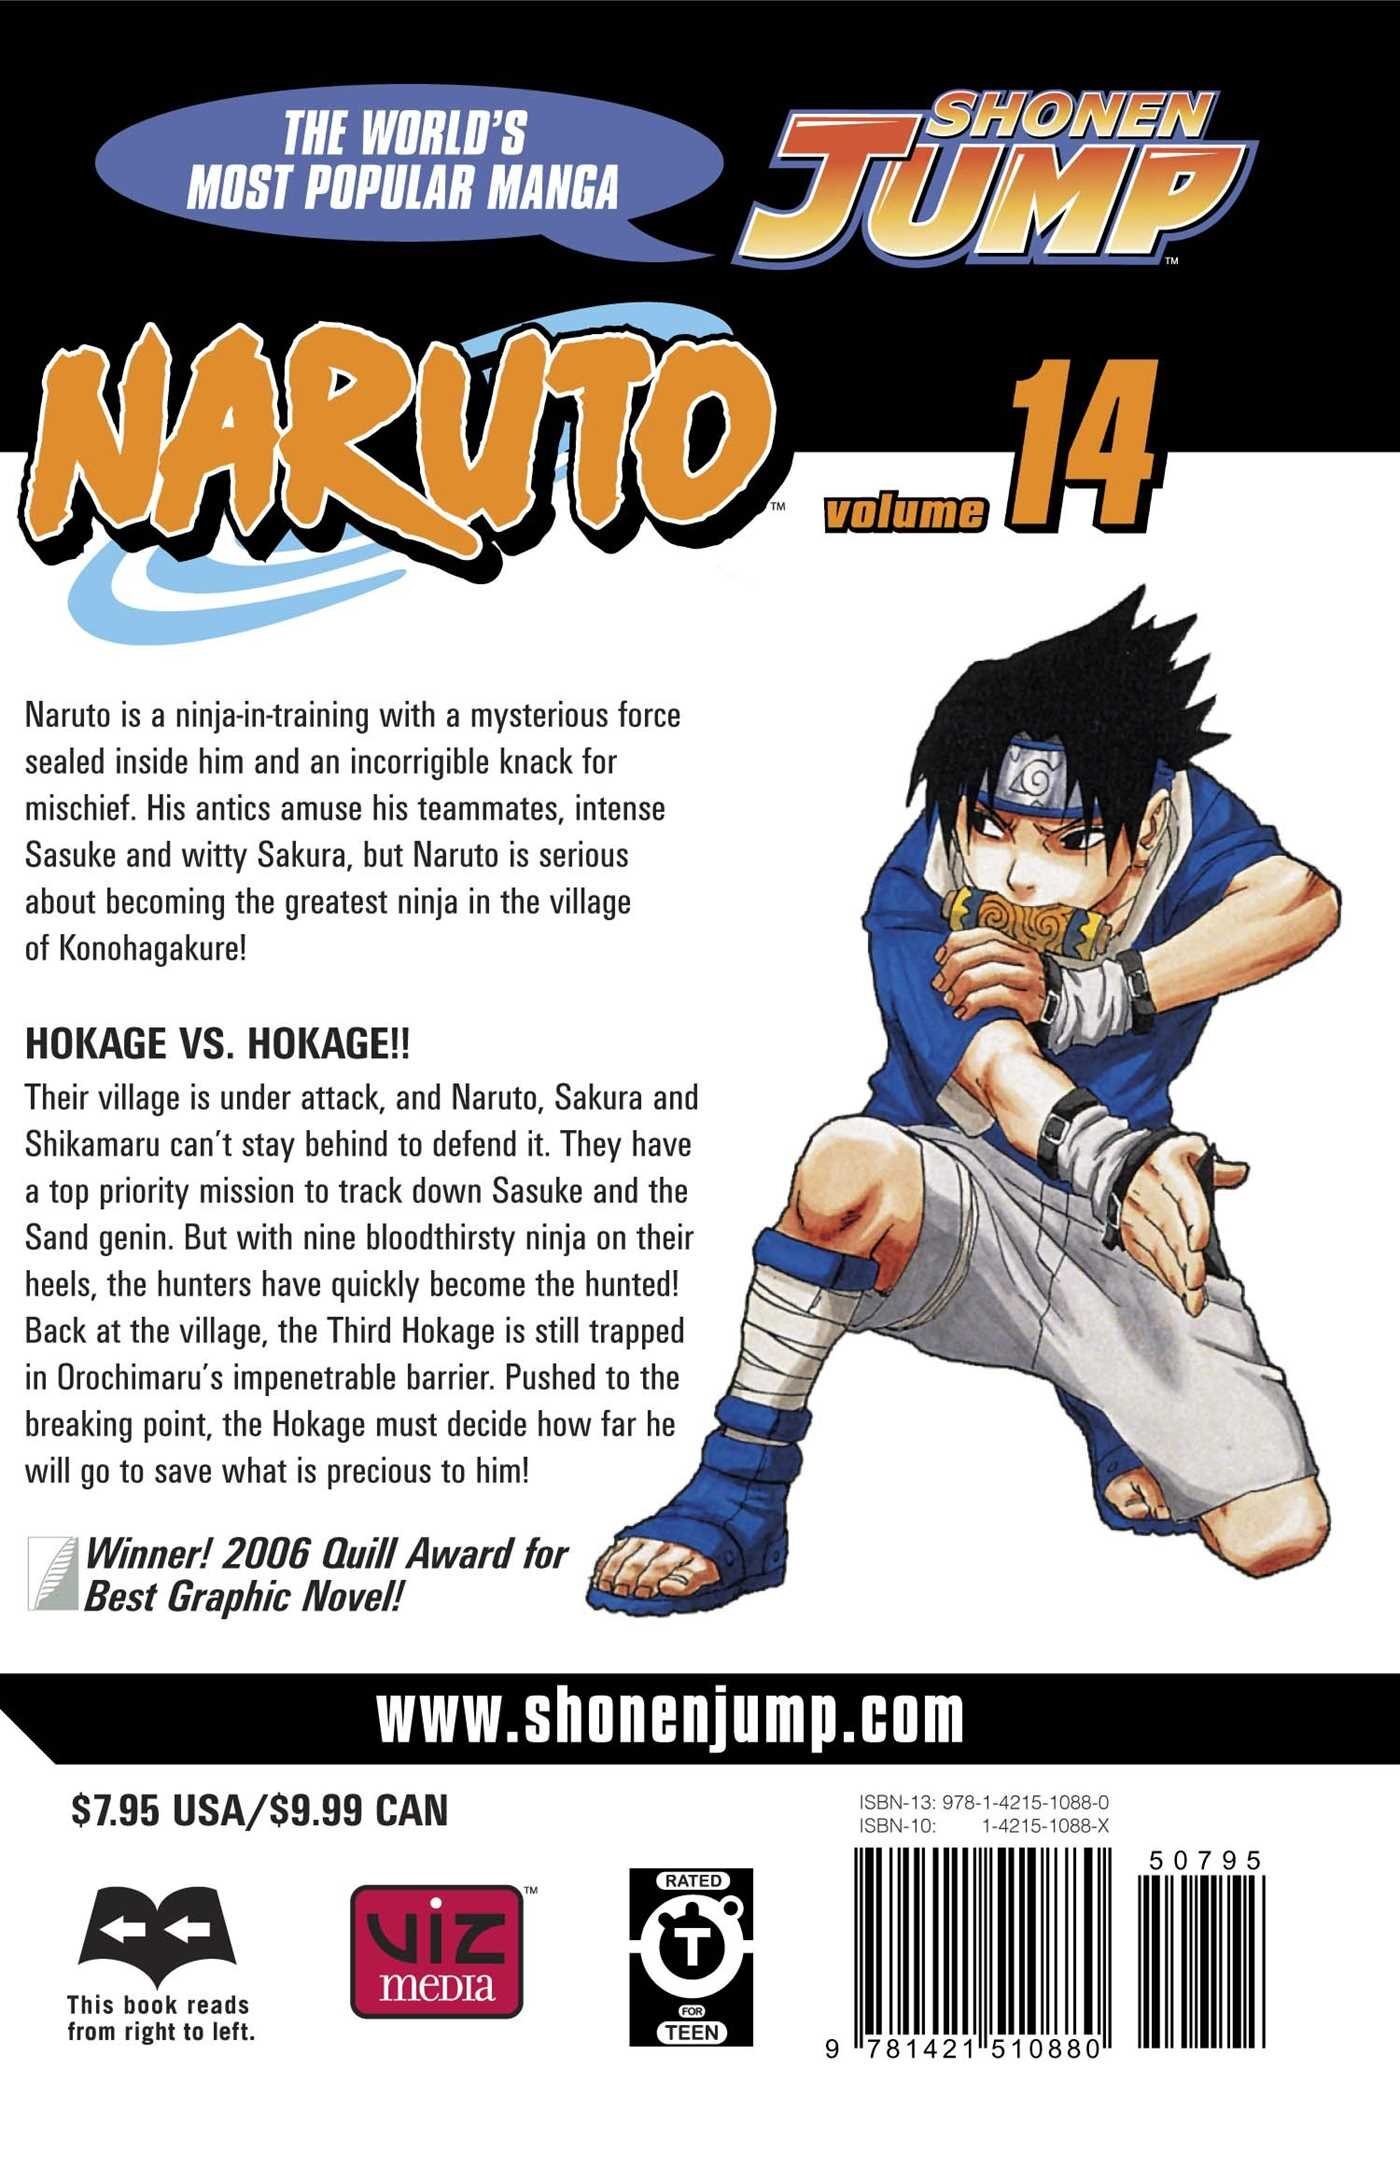 NARUTO vol 14 [MANGA PT] :: HOKAGE CONTRA HOKAGE! – 7D Comics FX